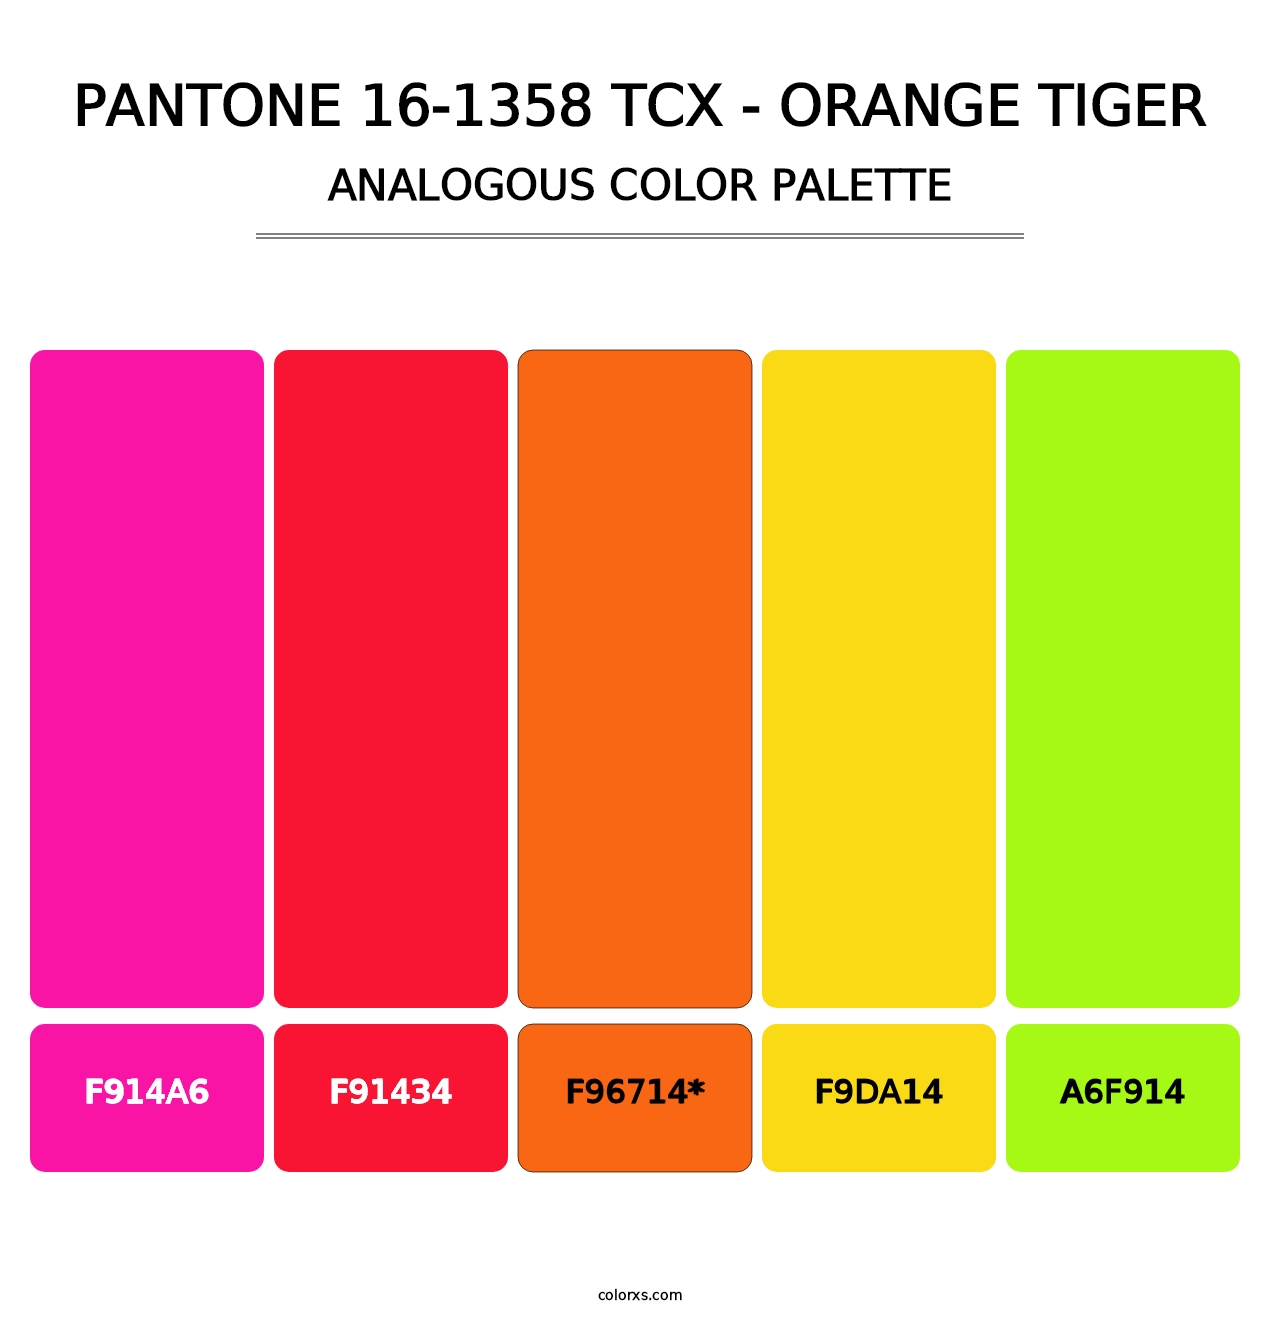 PANTONE 16-1358 TCX - Orange Tiger - Analogous Color Palette